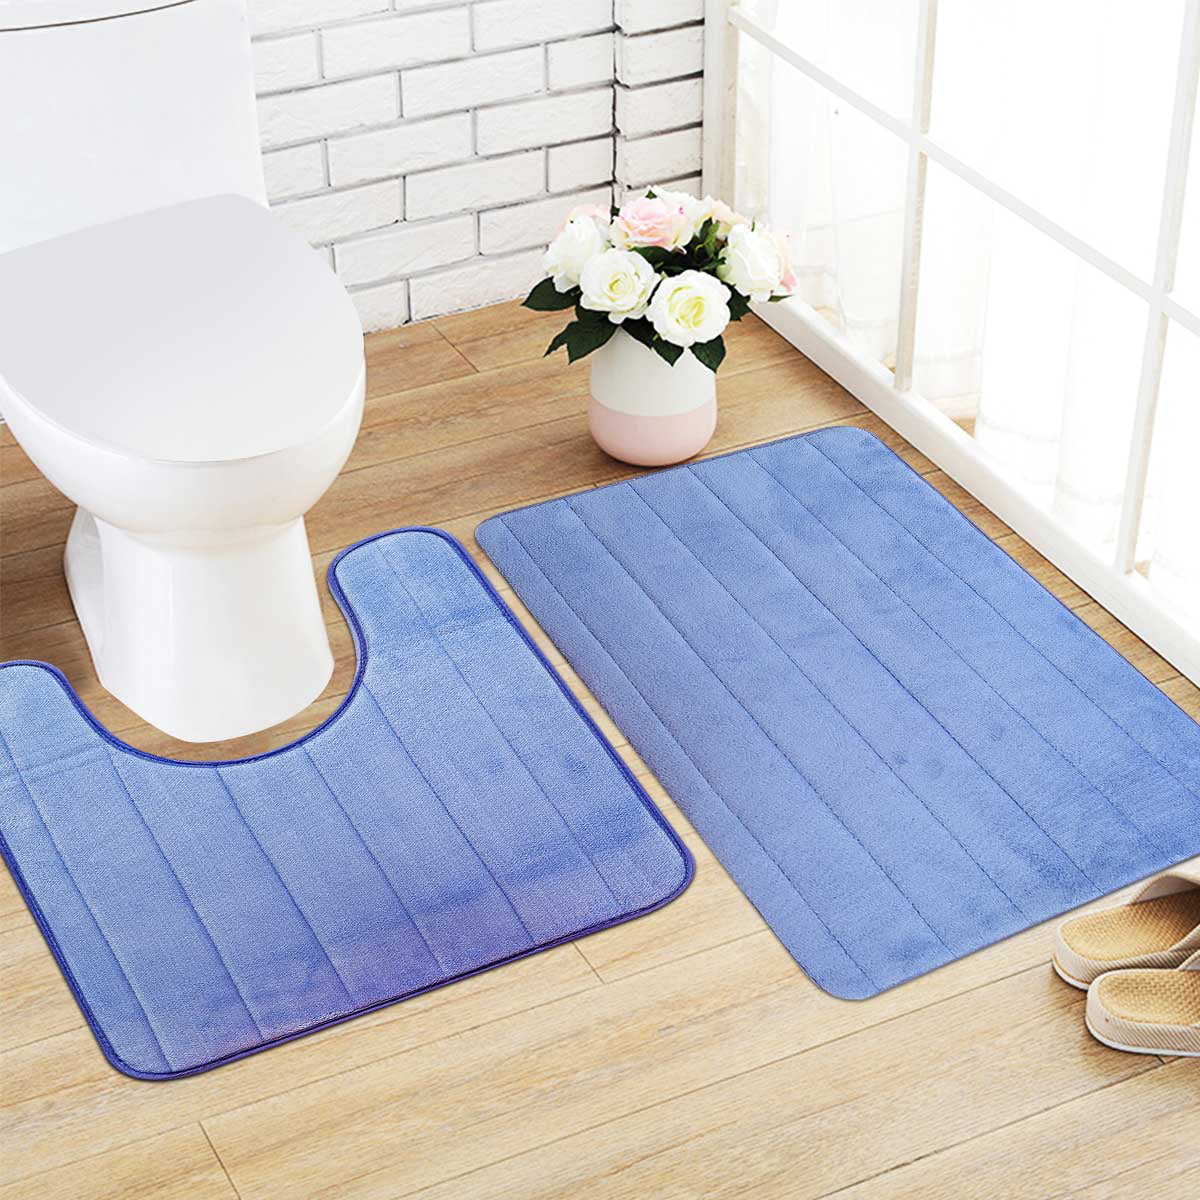 Bath Rug Non-slip Absorbent Memory Foam Bathroom Carpet Floor Shower Mat Pad BT 